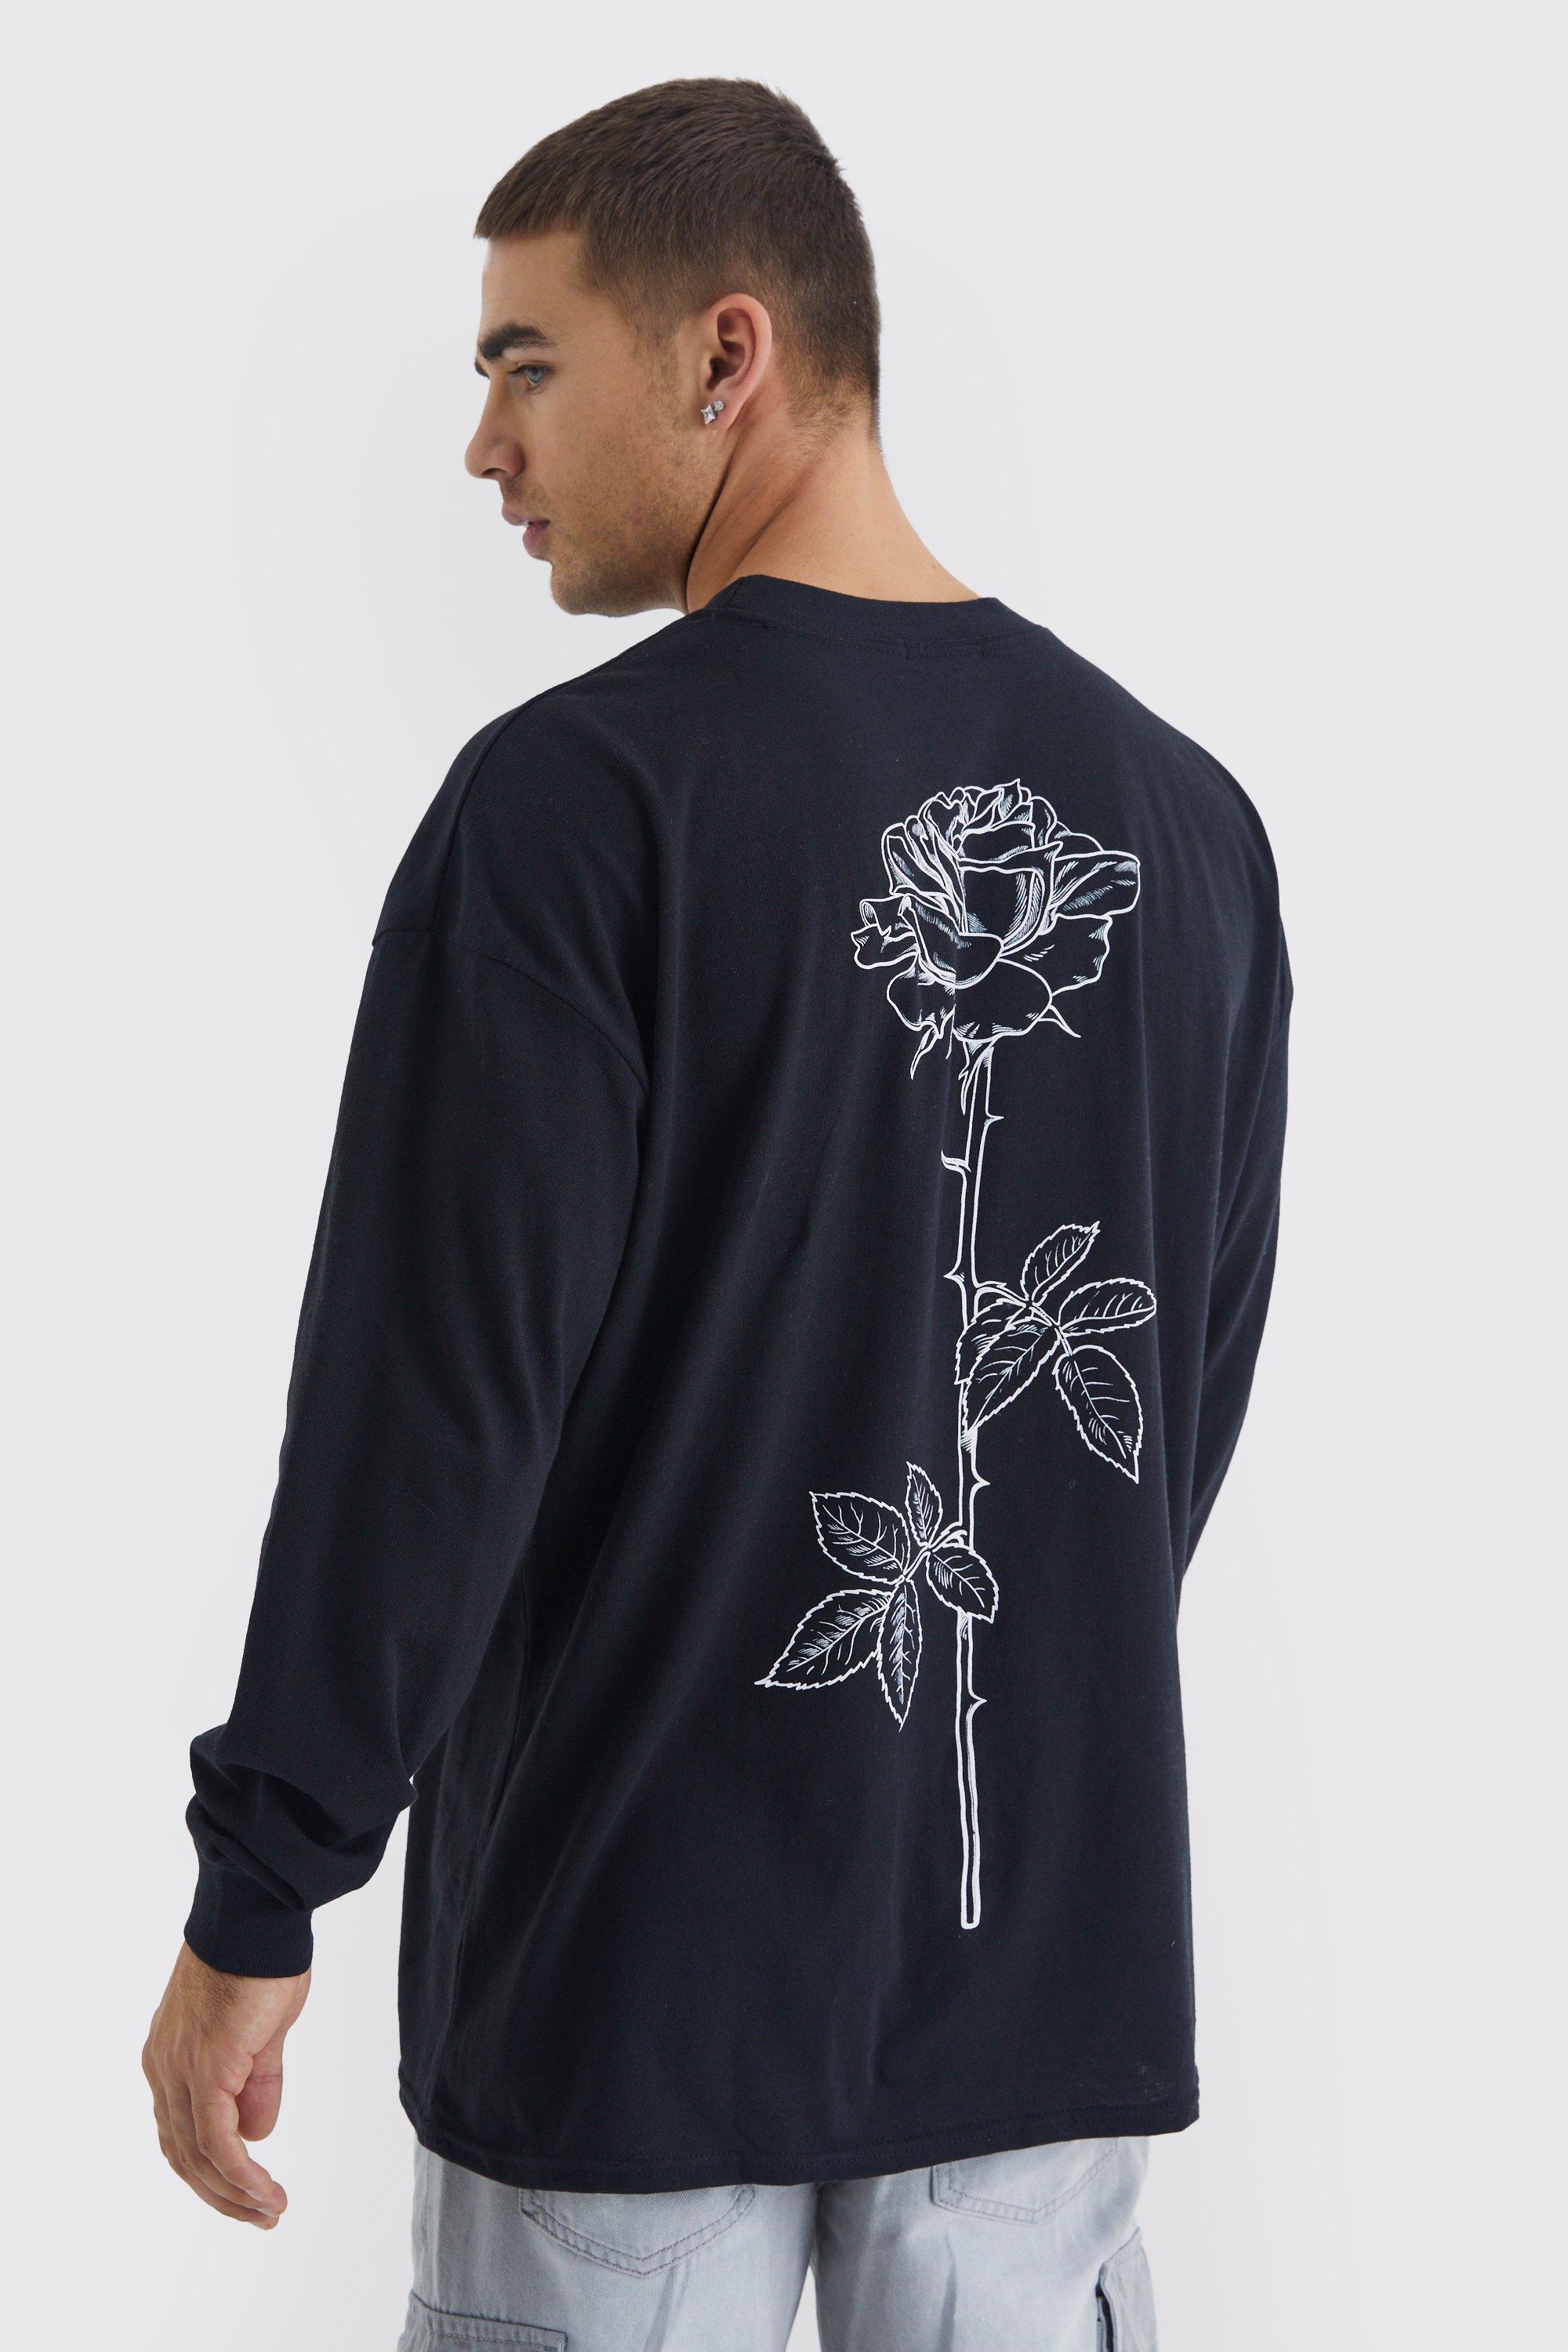 Mens Black Long Sleeve Line Drawn Rose Print T-shirt, Black